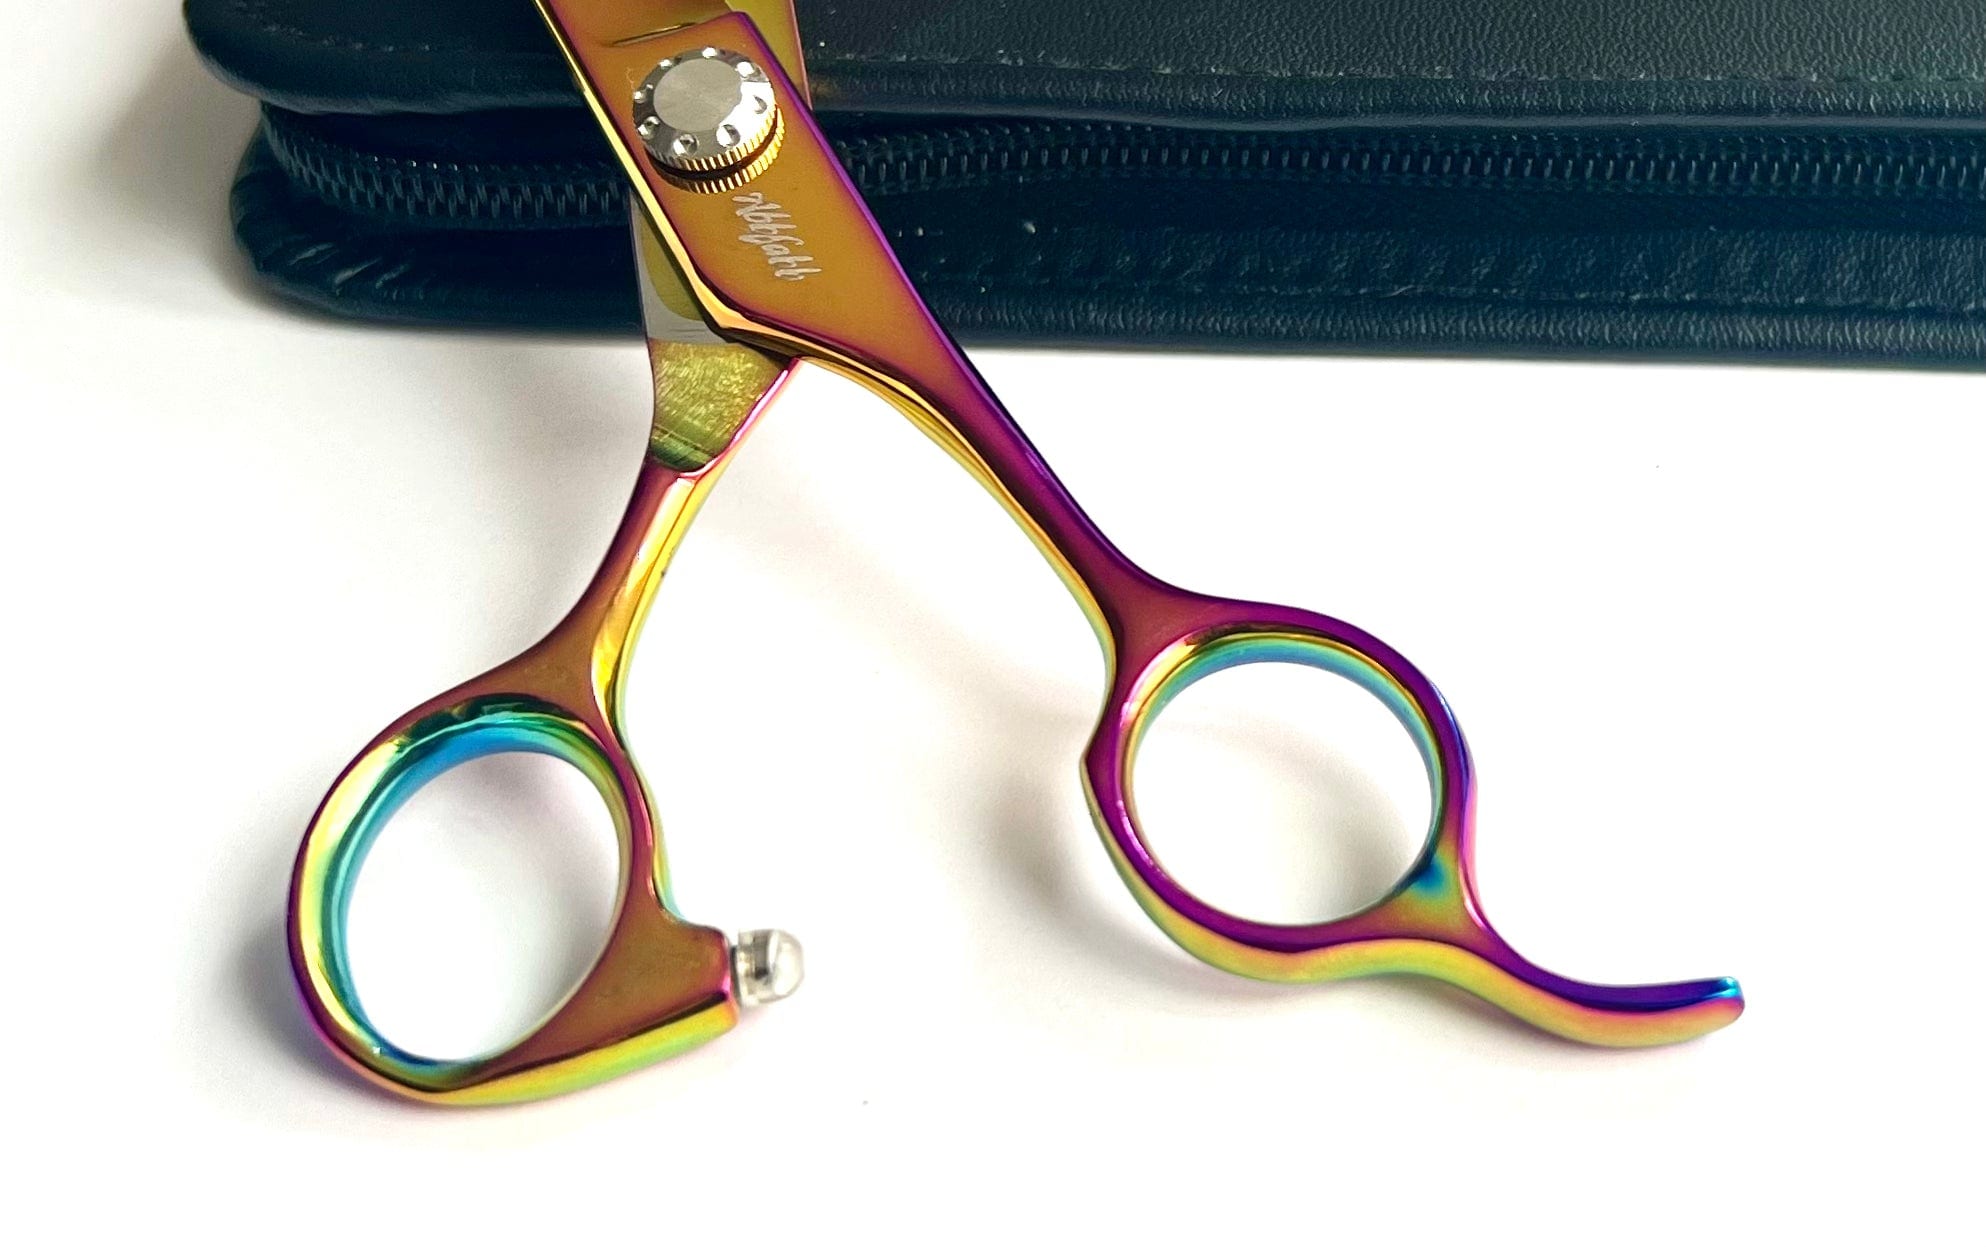 Abbfabb Grooming Scissors Ltd Rainbow Kissed 7.5” Curved Dog Grooming Scissor